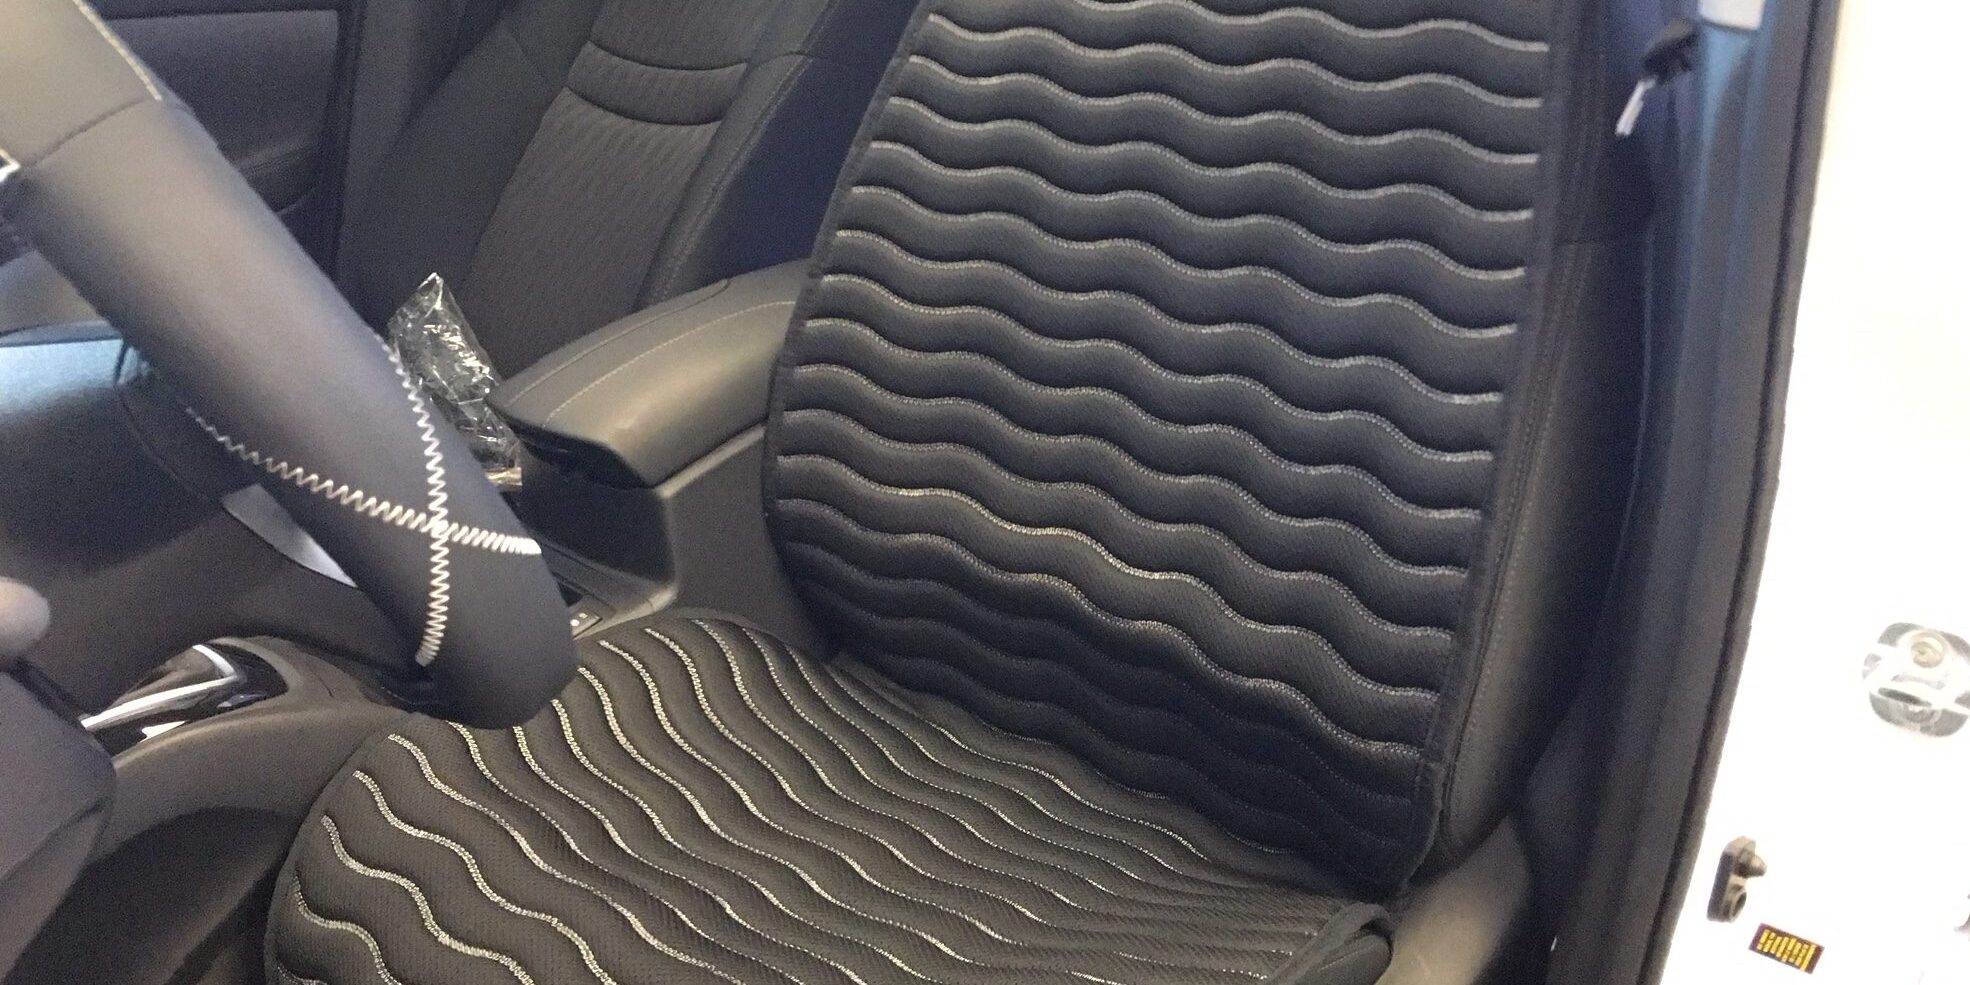 Cu8stom seat covers